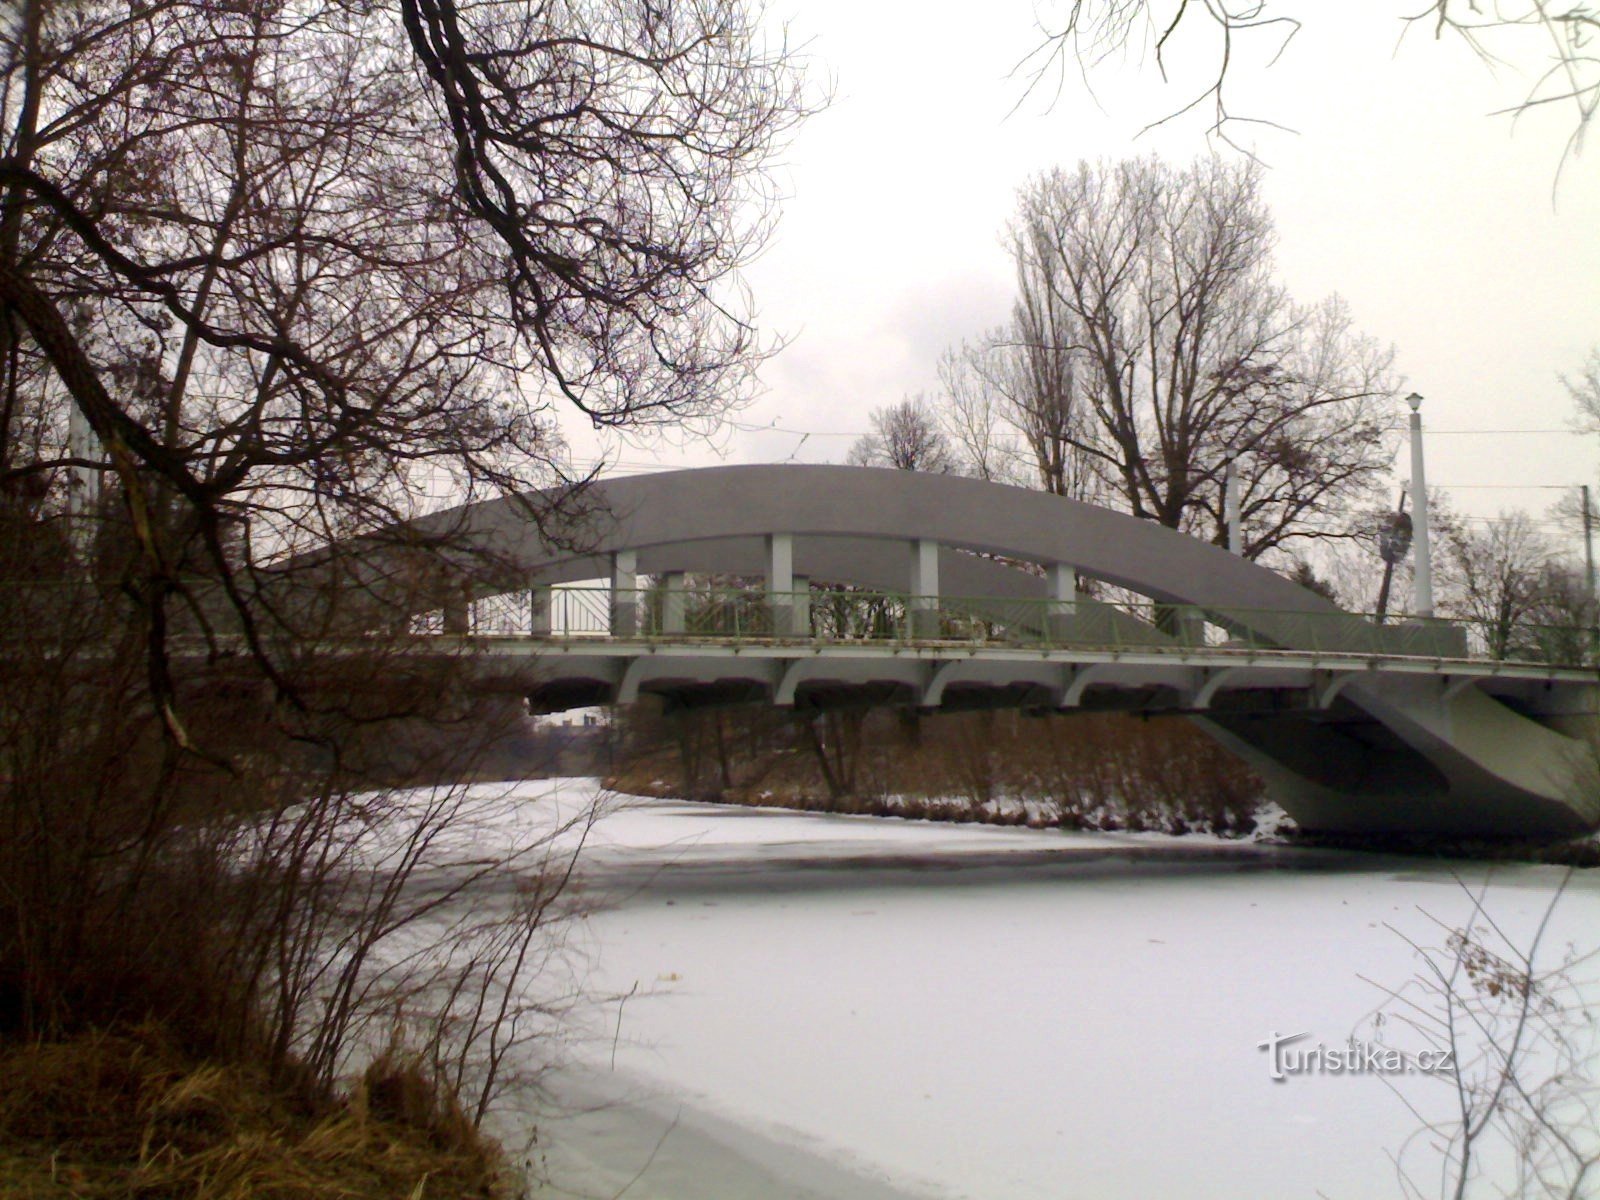 Malšovice-bron över Orlica